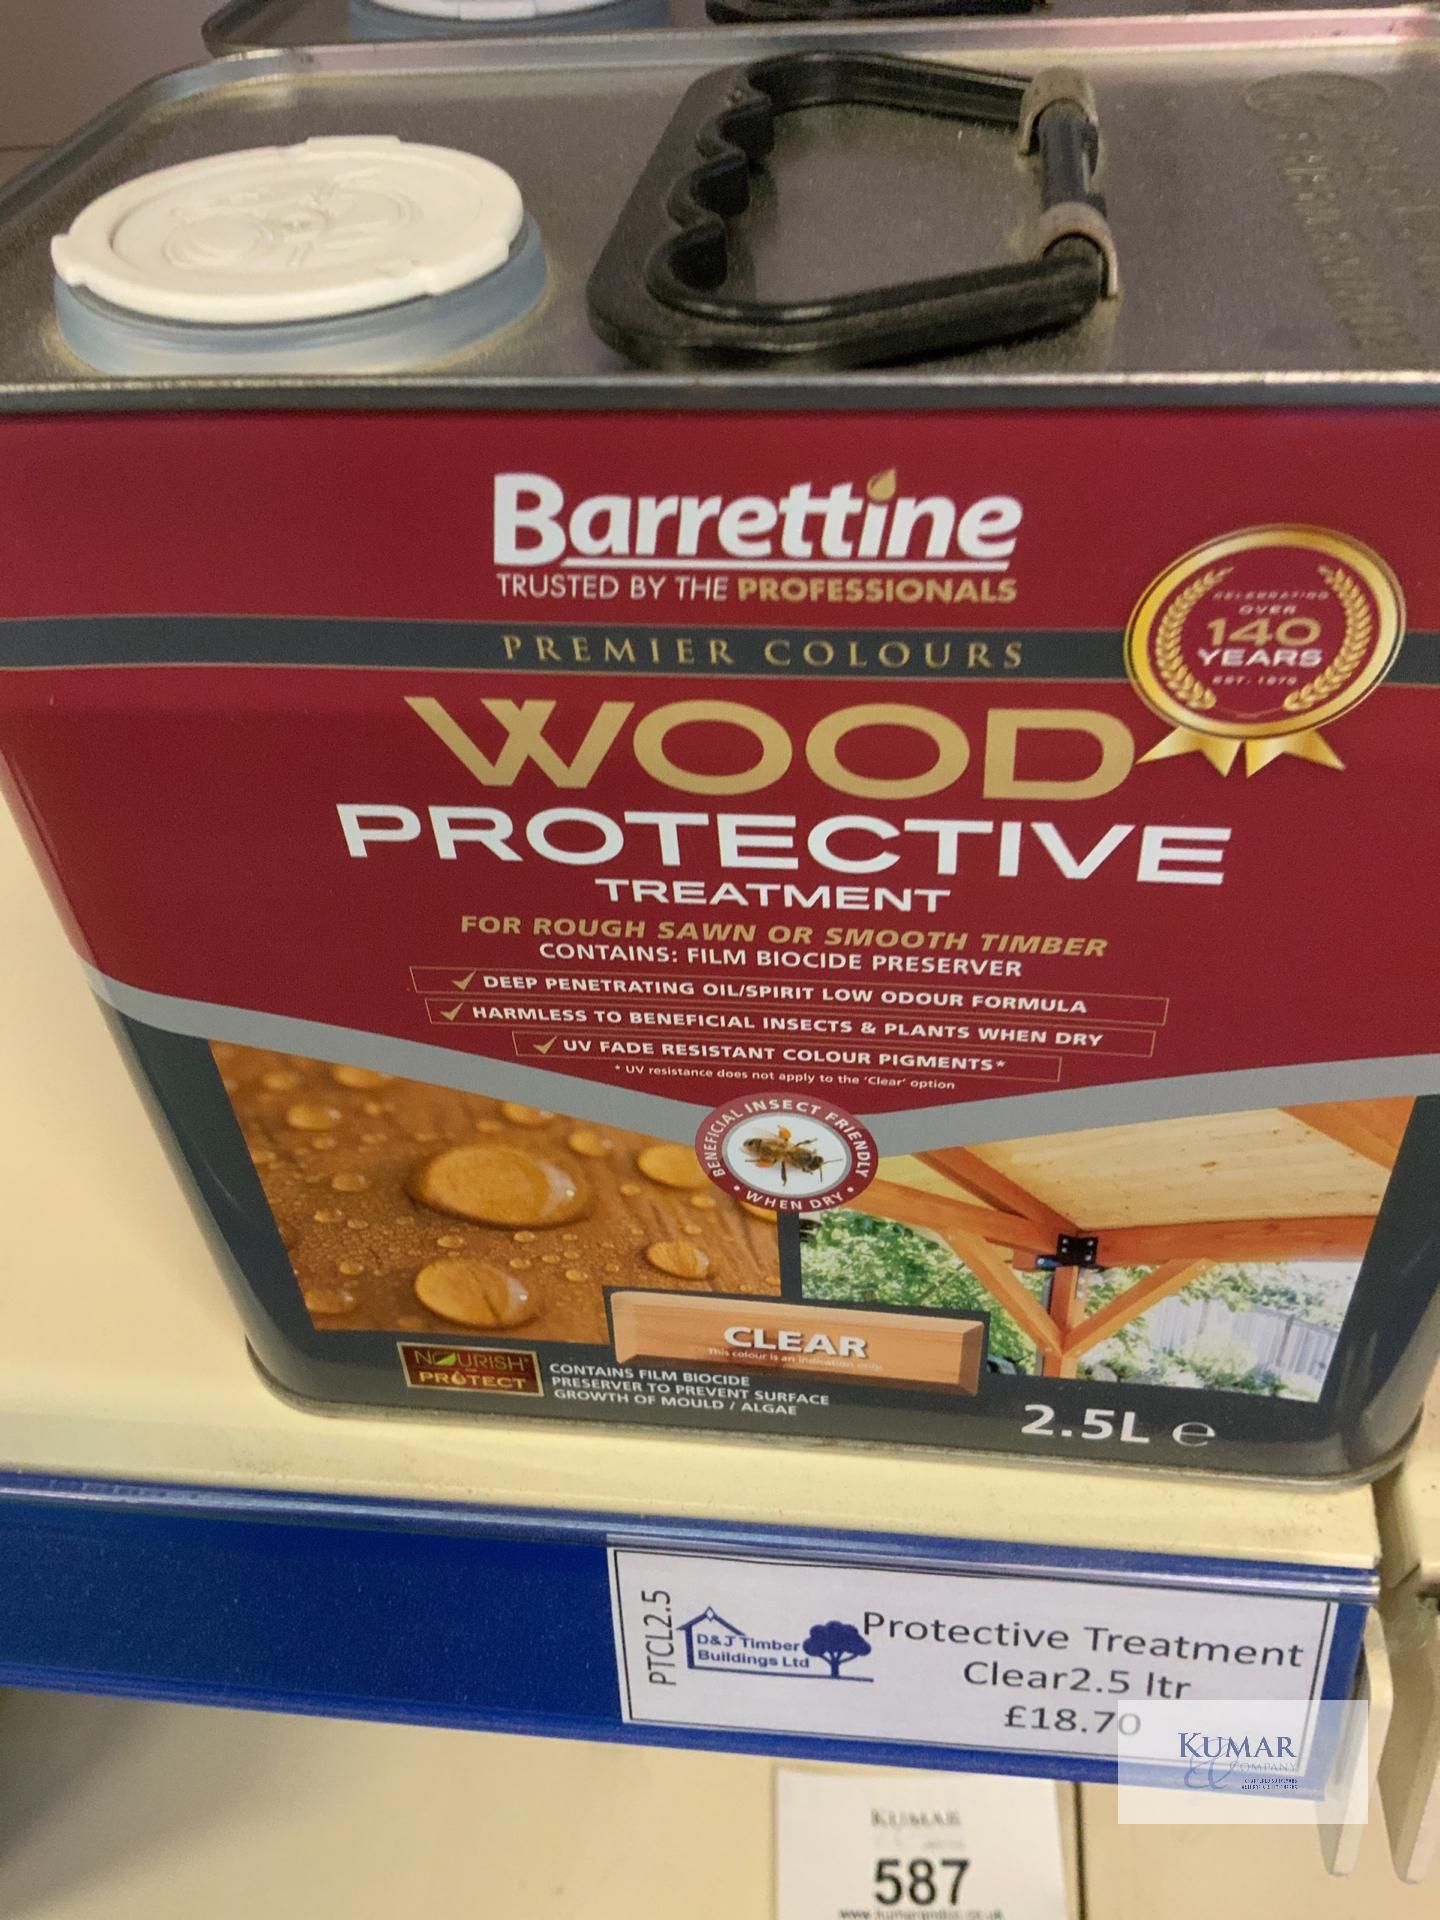 4: Barrattine Wood Protective Treatment Clear (RRP £18.70 each)